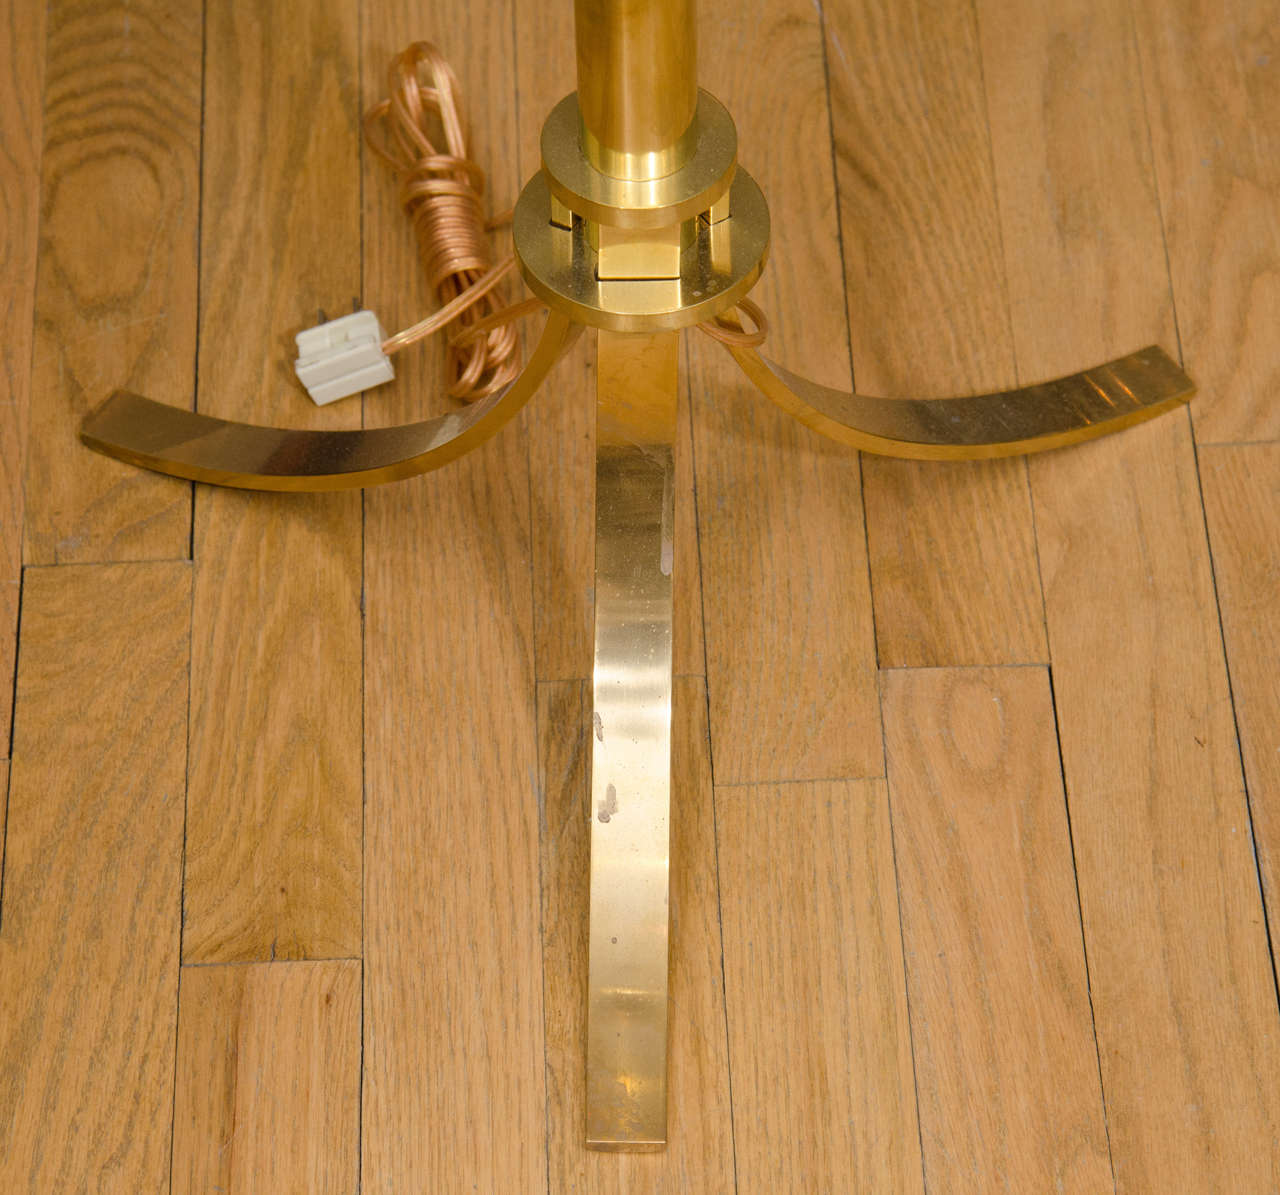 Single brass tripod floor lamp with spherical detail.